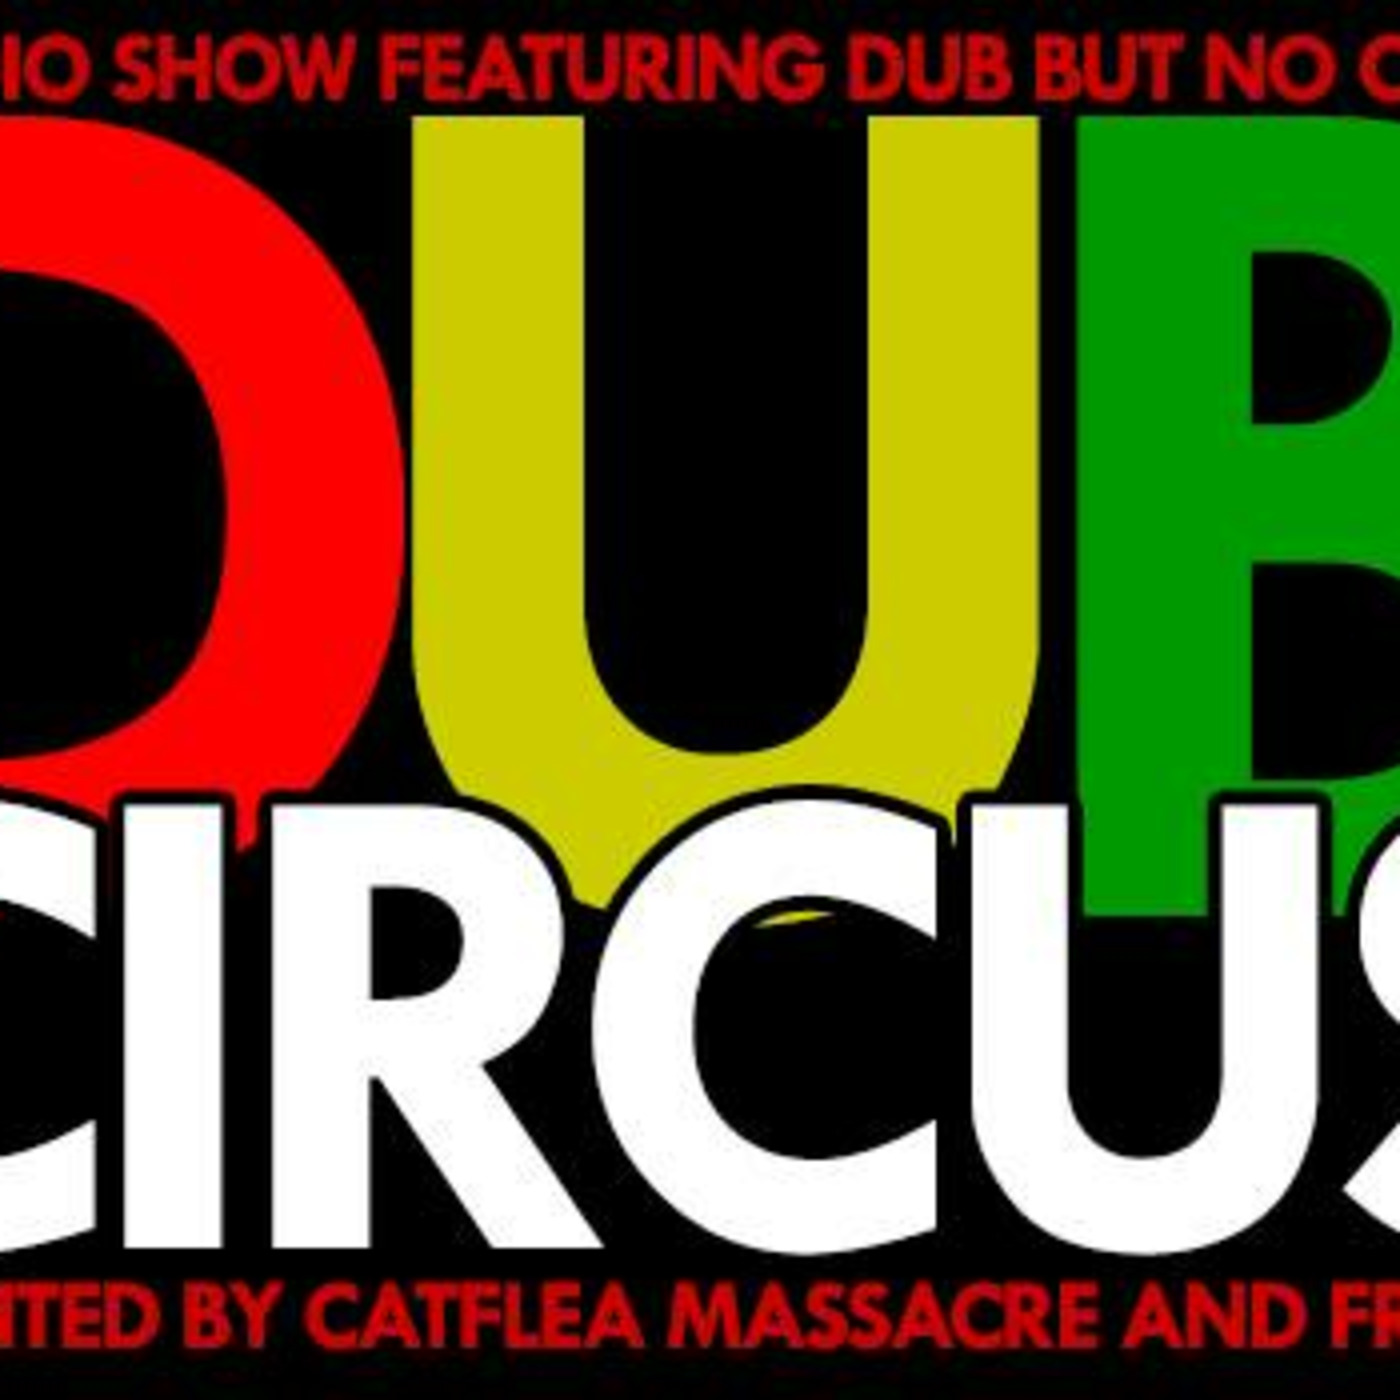 Episode 2709: Dub Circus Show 212 On bootboyradio.net